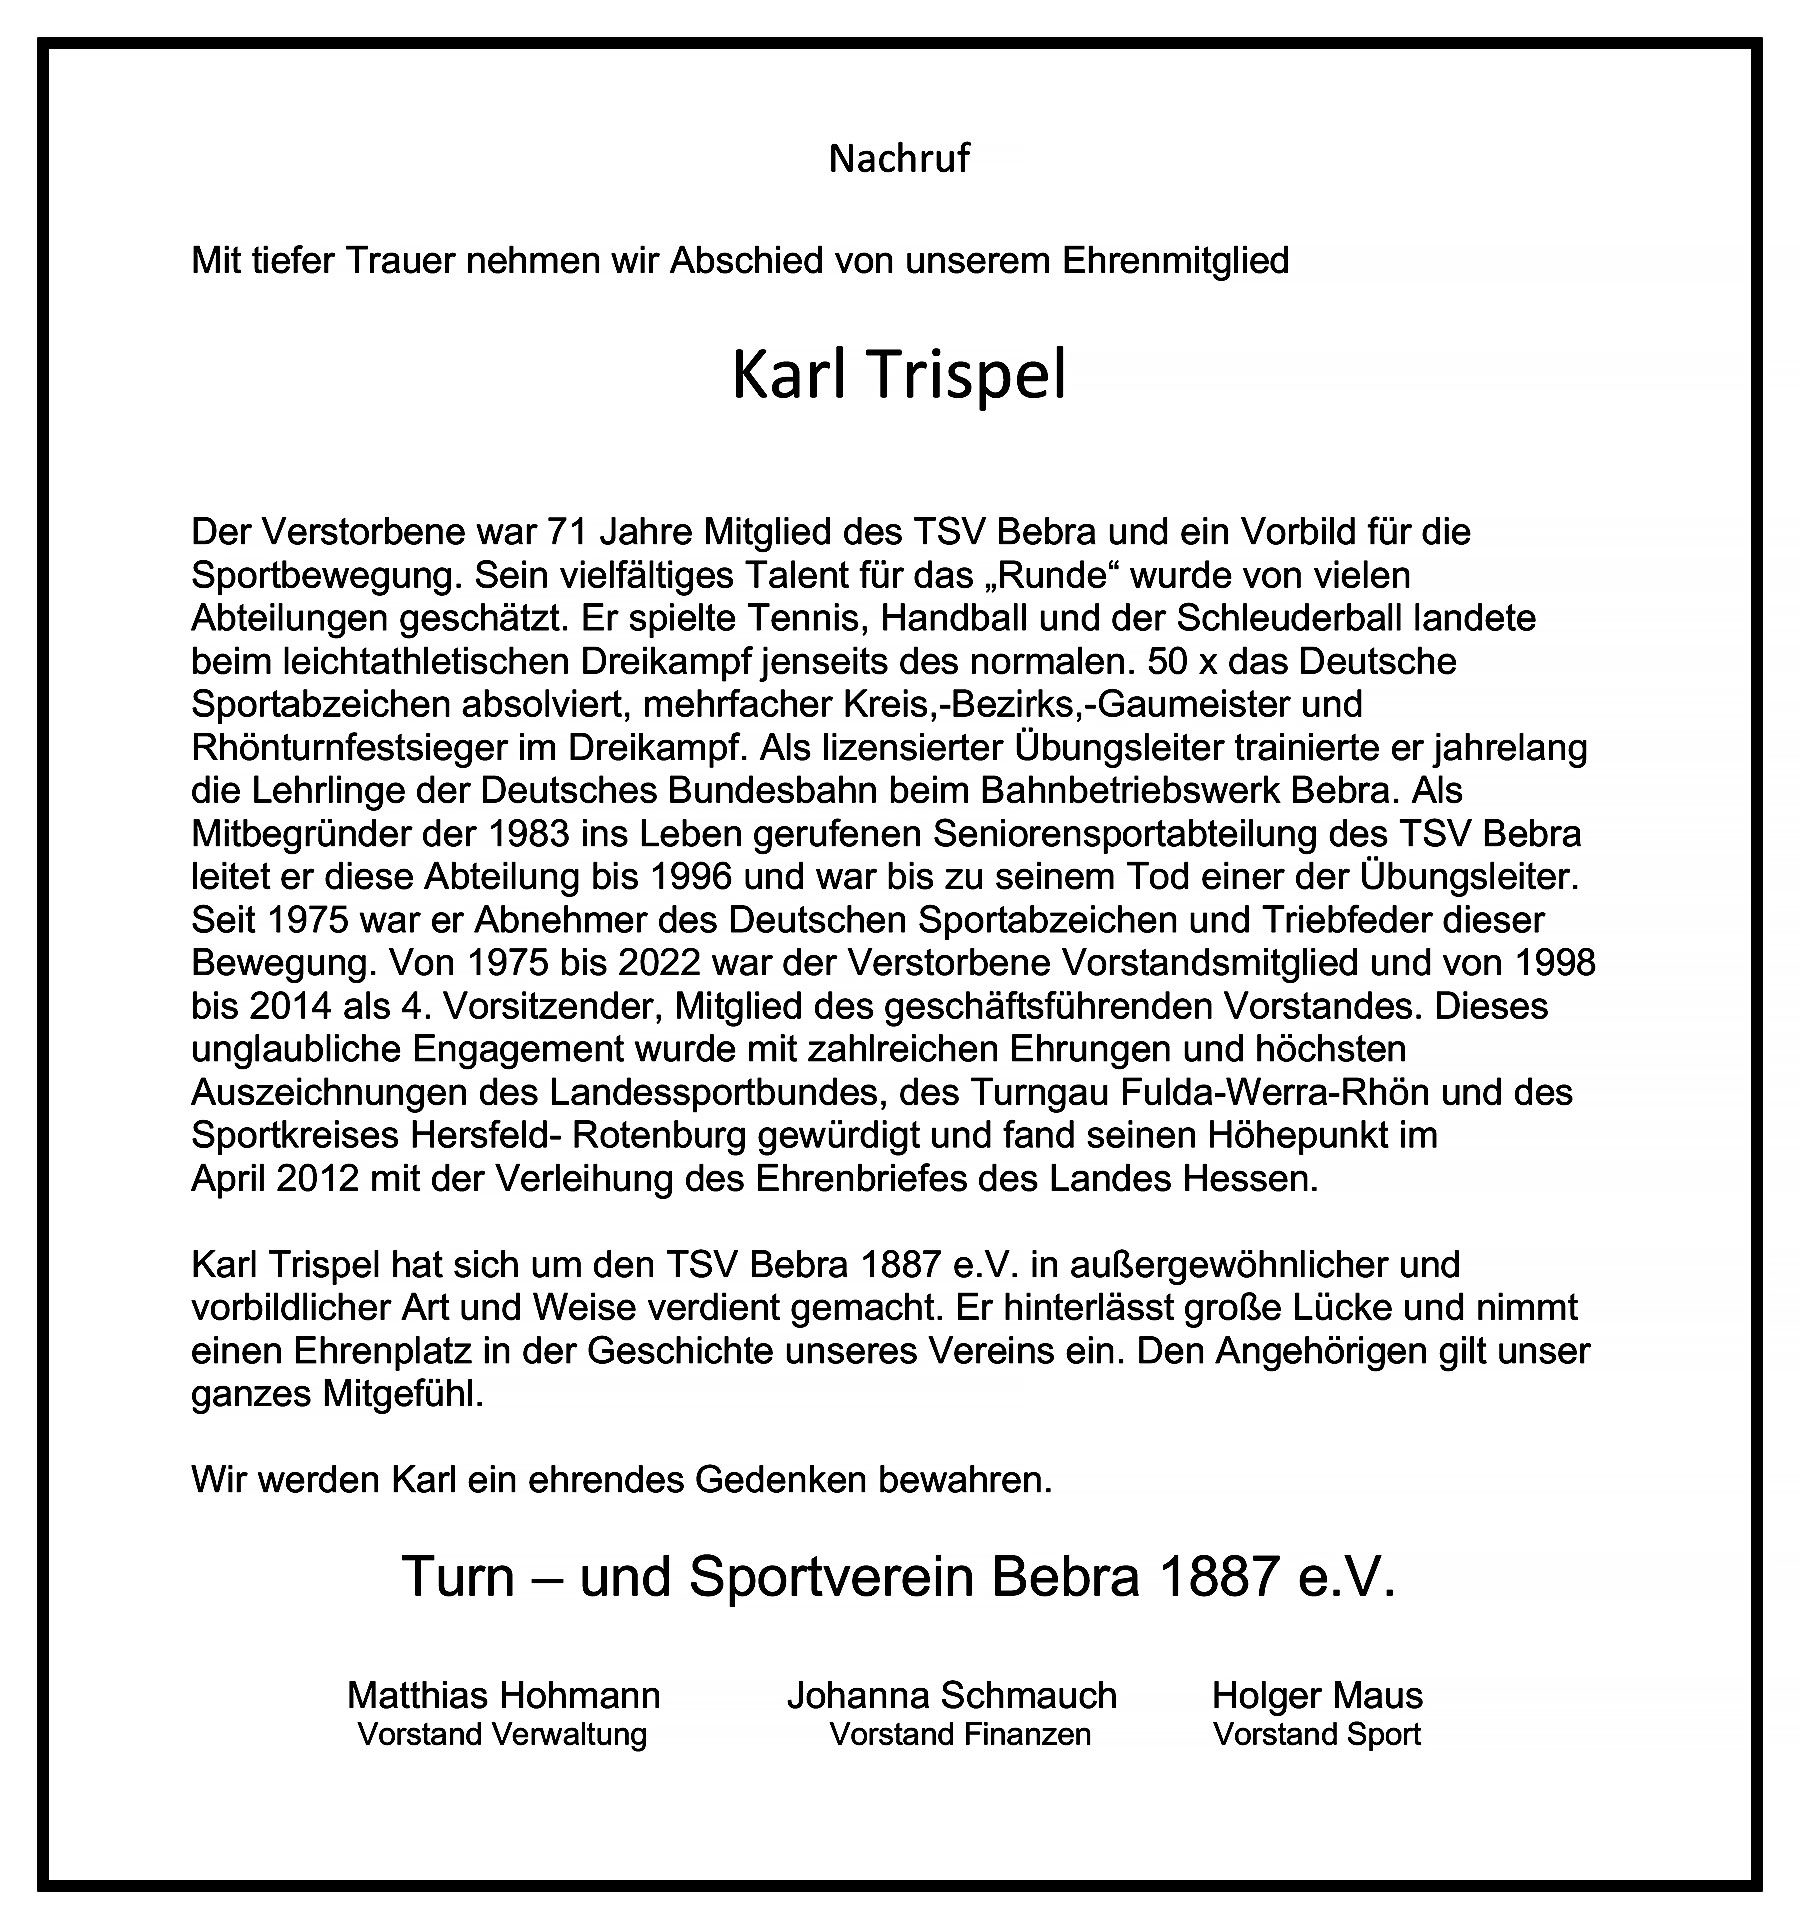 Nachruf Karl Trispel